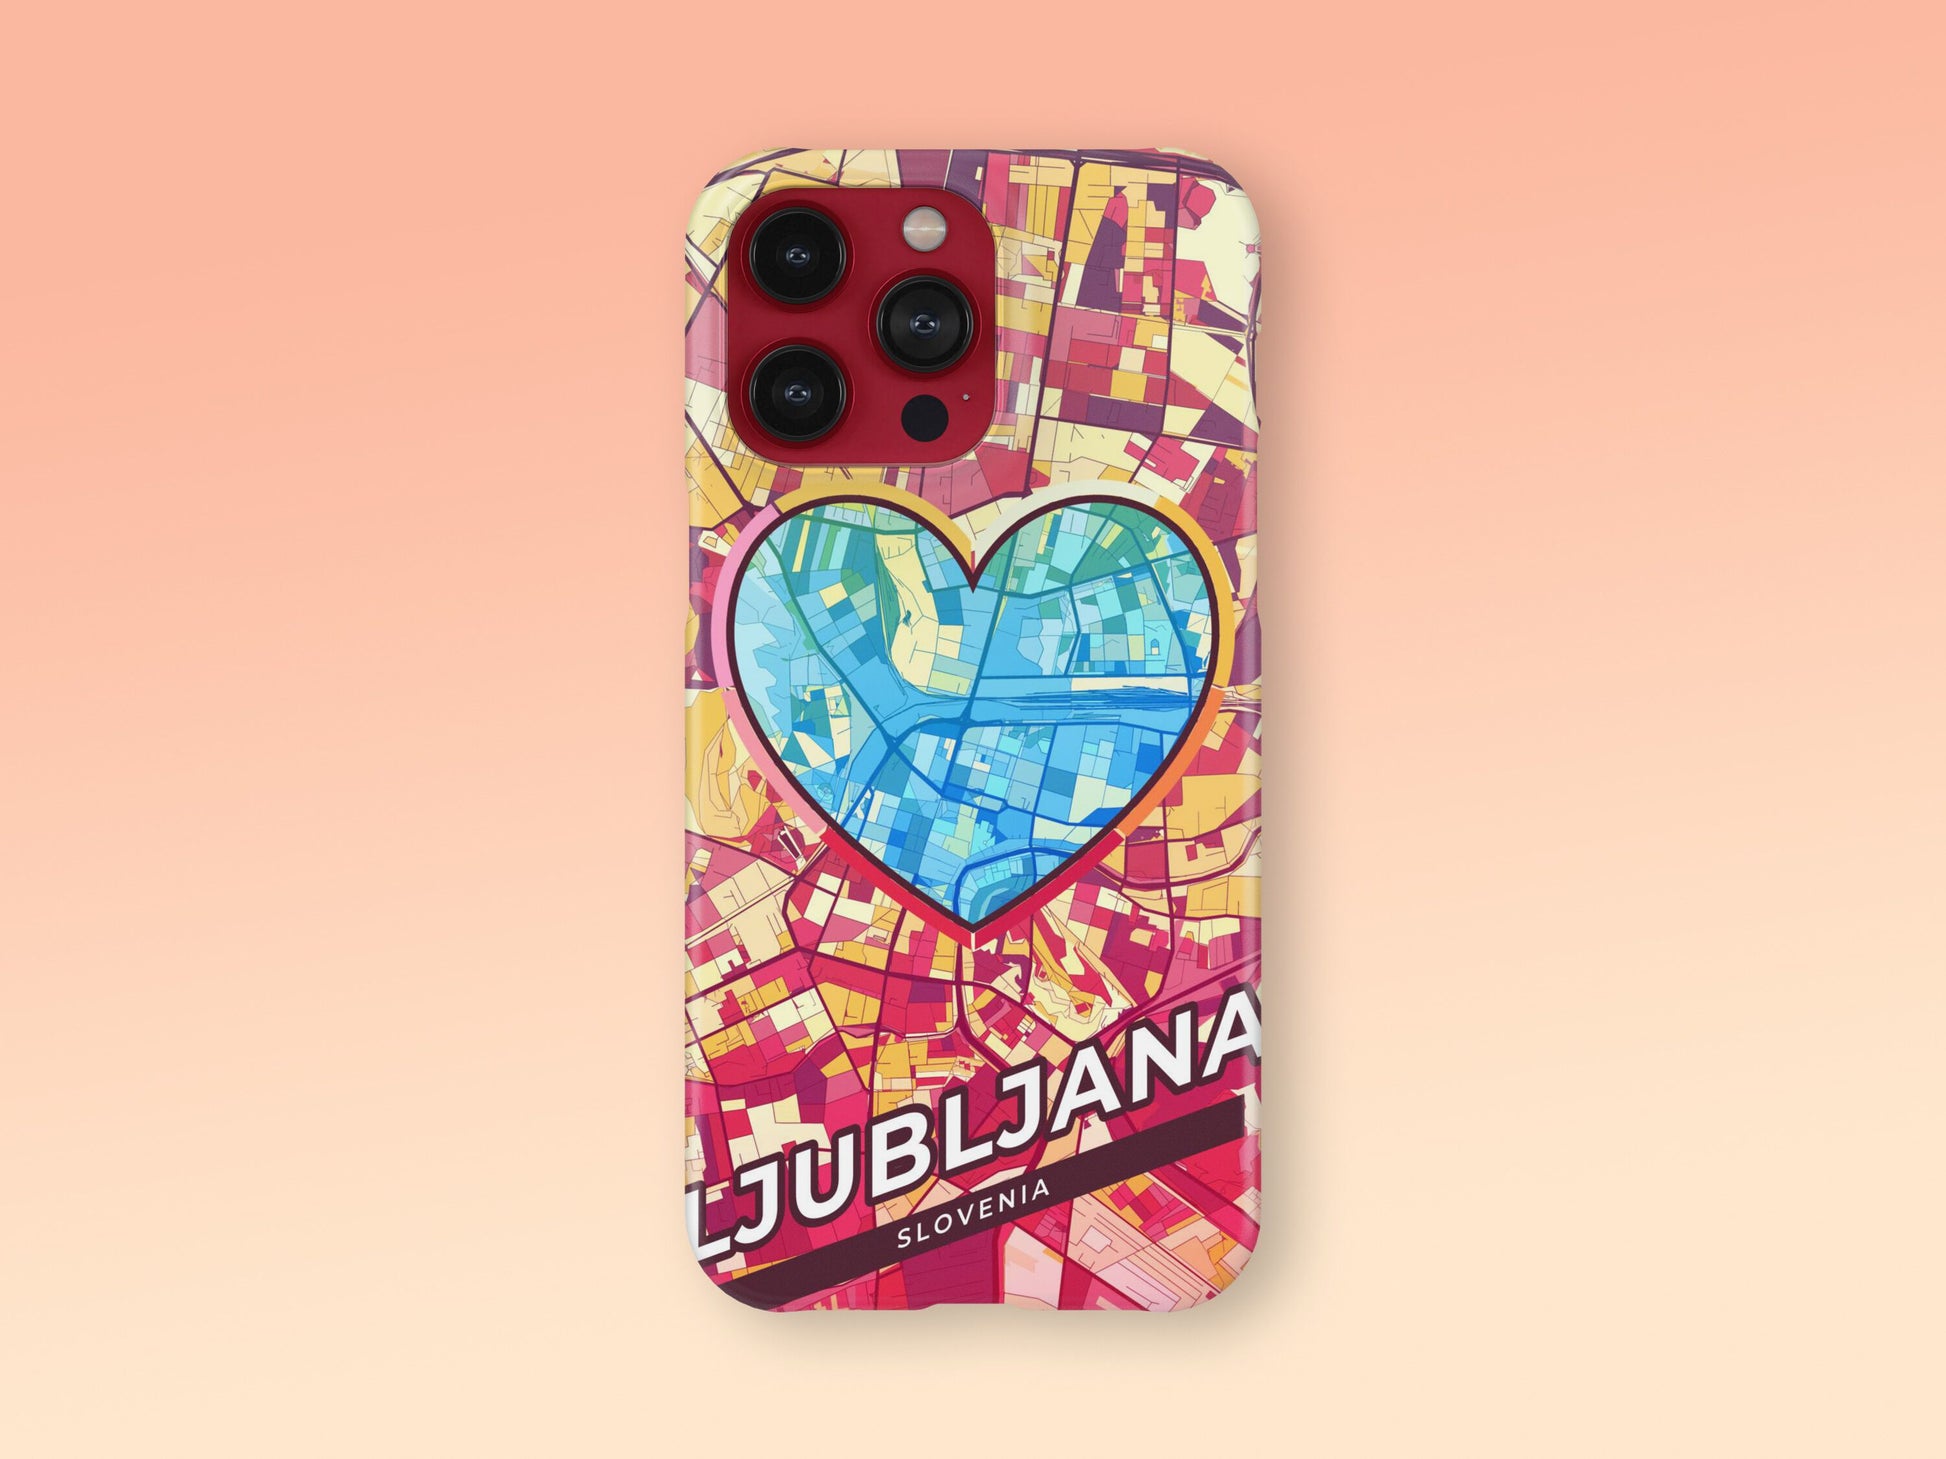 Ljubljana Slovenia slim phone case with colorful icon. Birthday, wedding or housewarming gift. Couple match cases. 2